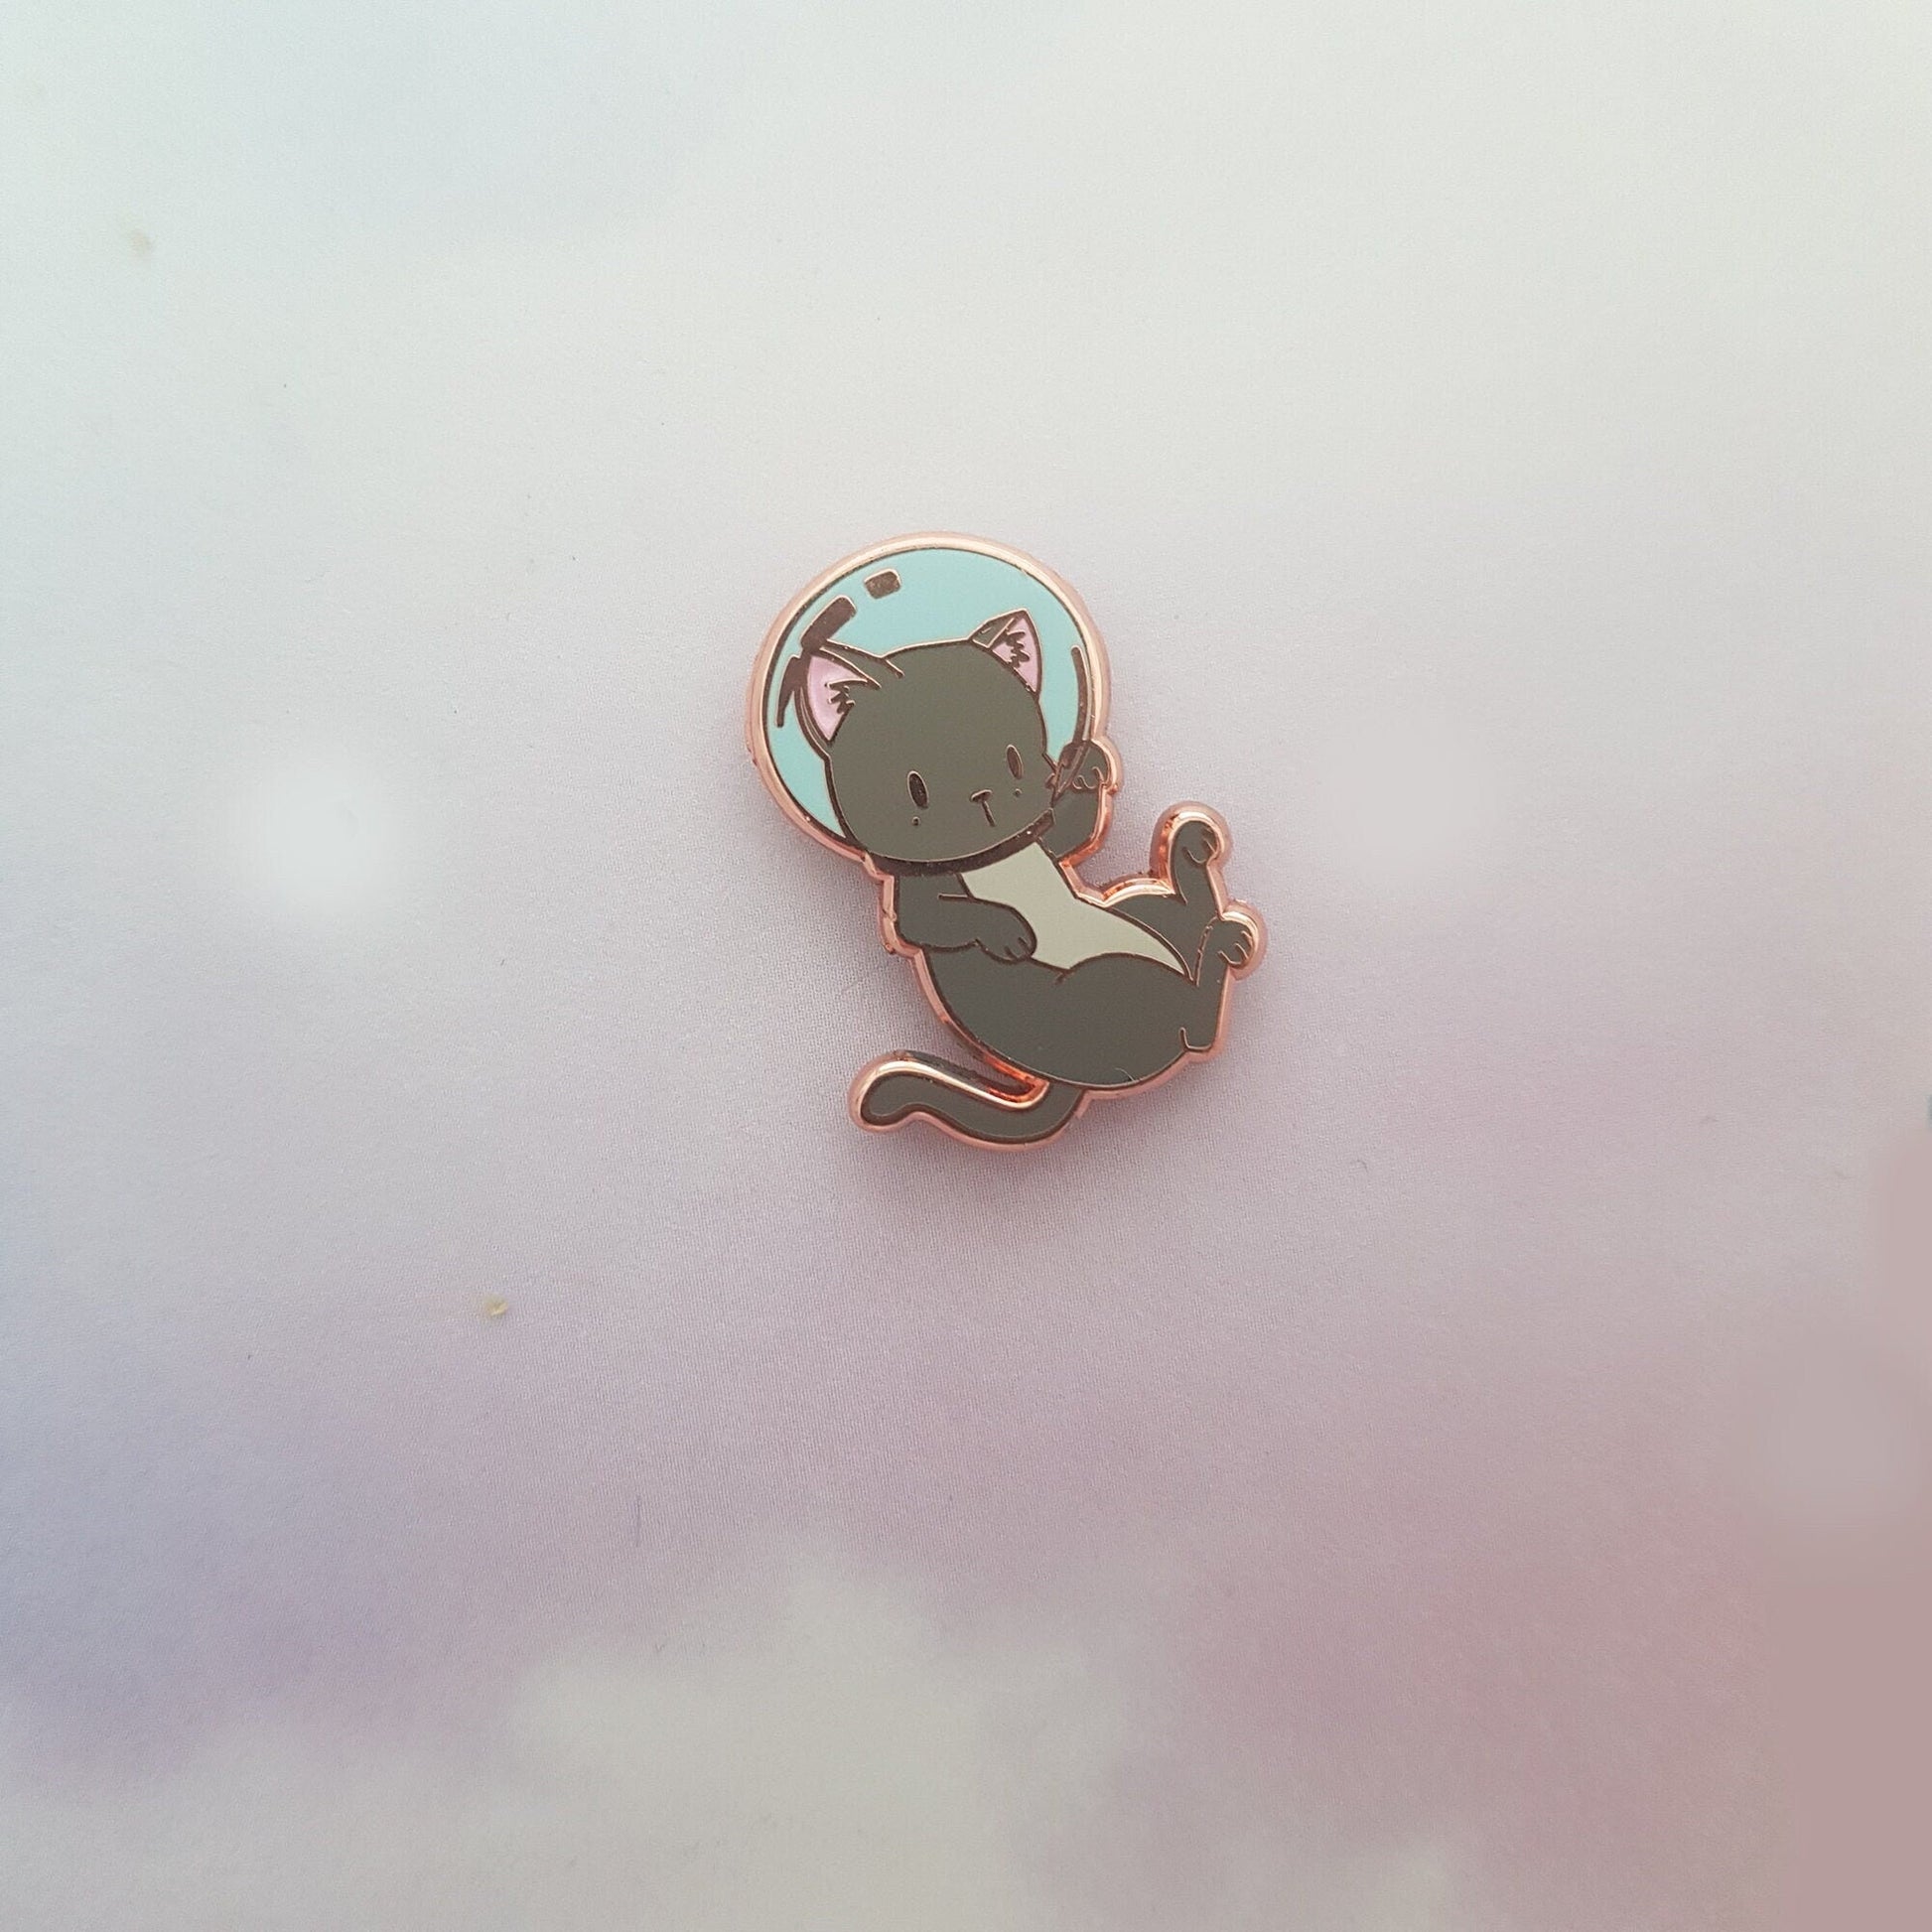 Space Kitty - Small Enamel Pin (Cosmo Kitty Lapel Pin, Kawaii Cat, Hard Enamel Pin), Pins, Brooches & Lapel Pins